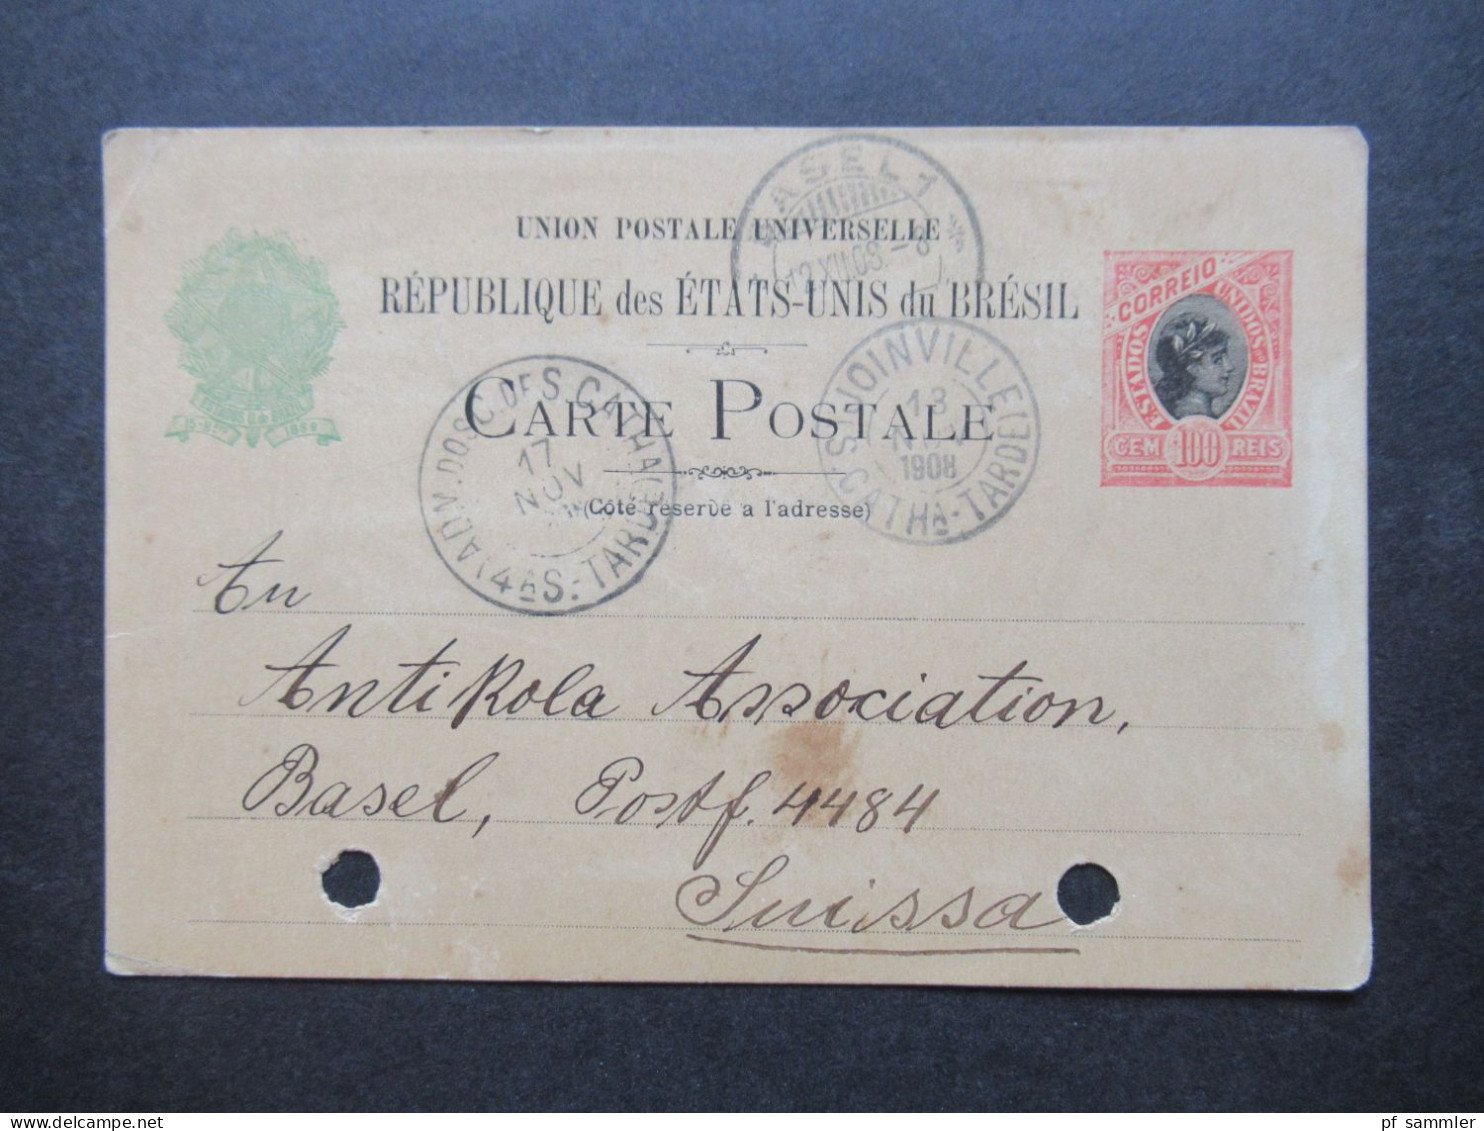 Brasilien 1908 Ganzsache 100 Reis Auslandsverwendung Joinville - Basel Schweiz Stp. Adm. Dosc. Des Catha 4As Tarde - Ganzsachen